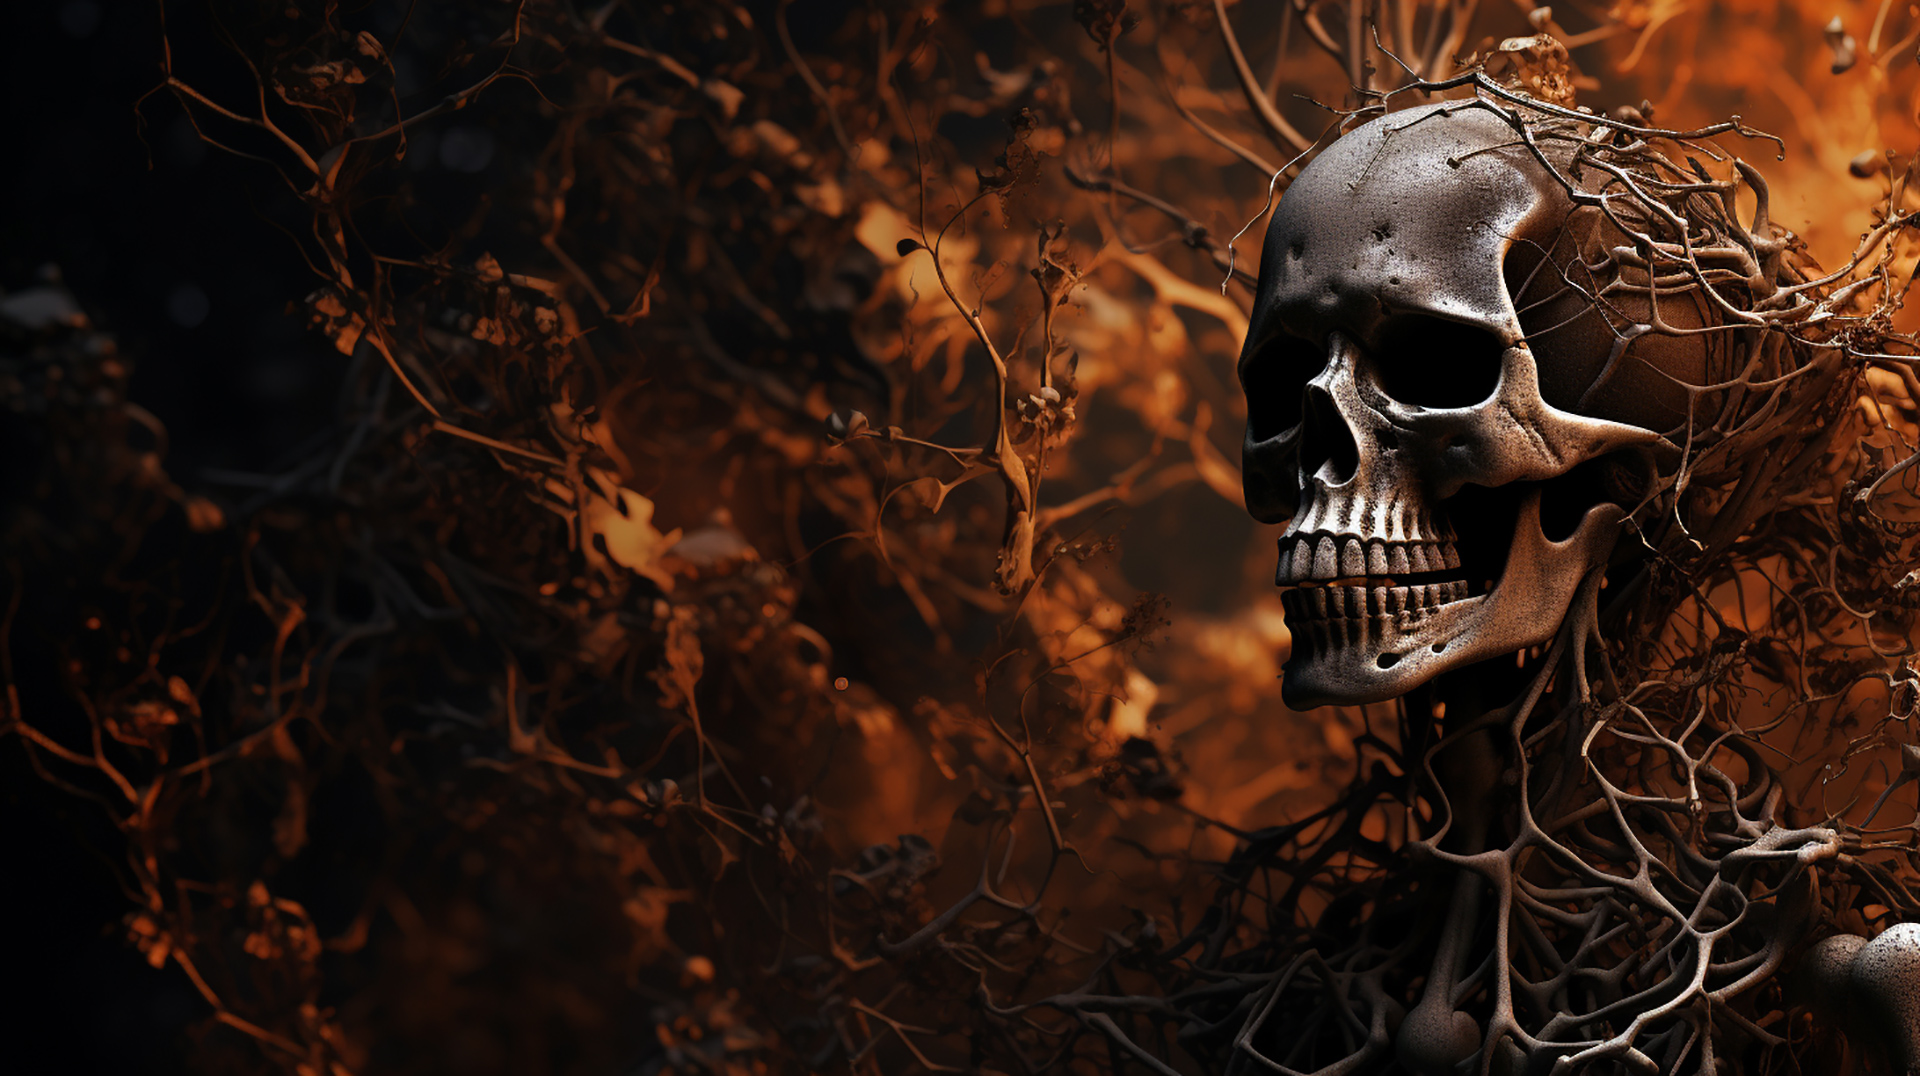 Creepy and Dark: 4K Wallpaper Featuring AI Skeletons